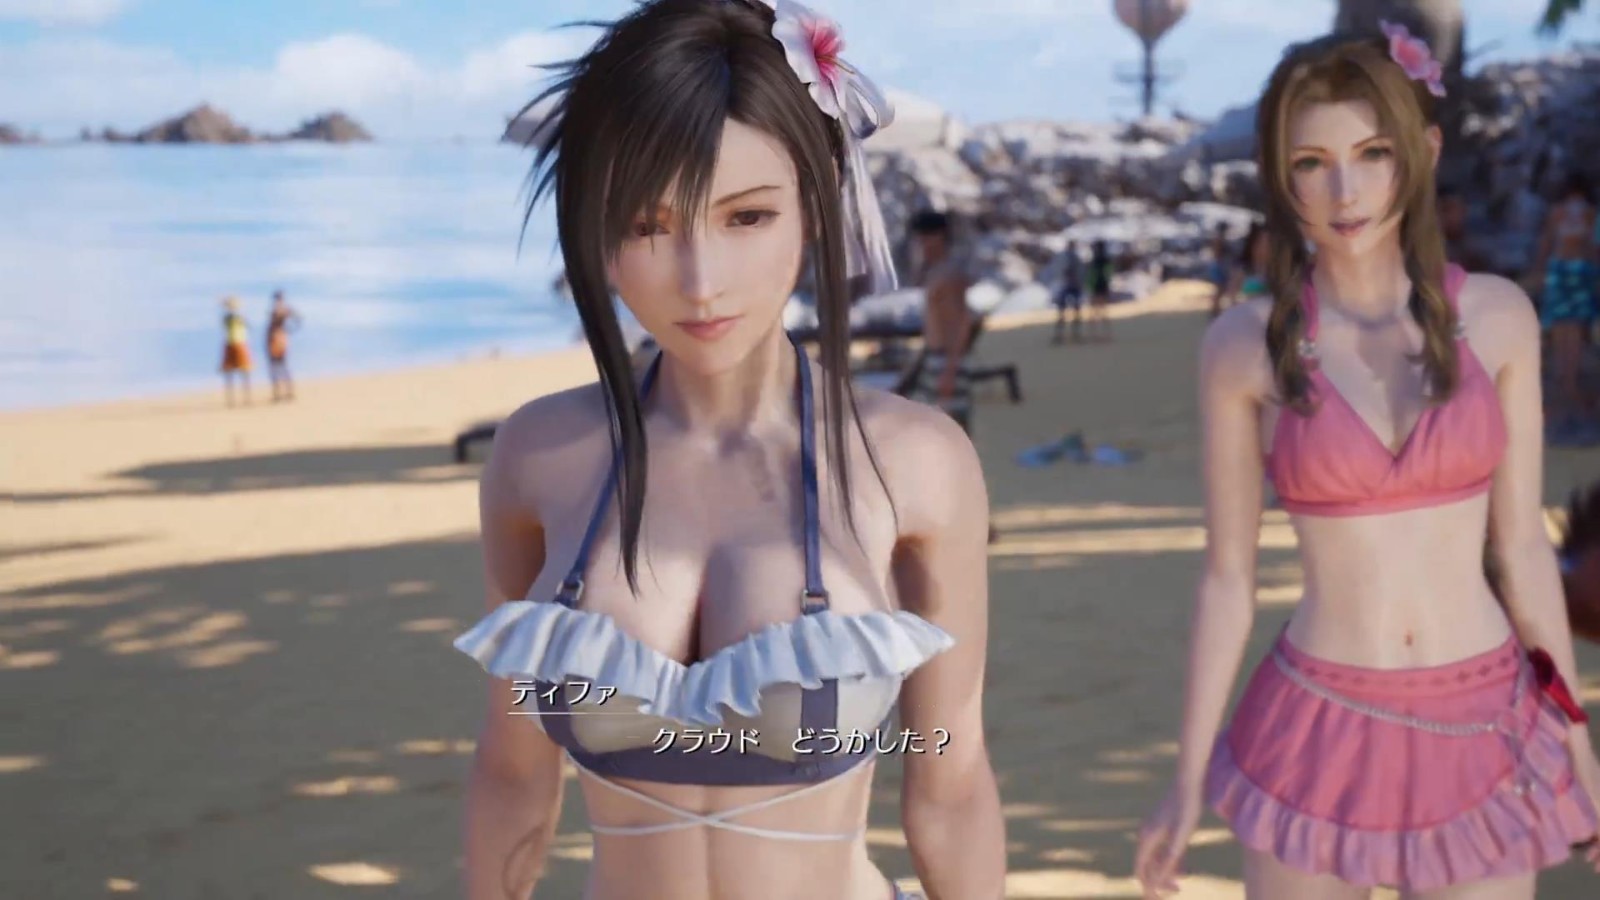  Final Fantasy 7: Rebirth New Video: Tiffany Alice Wears Swimsuit